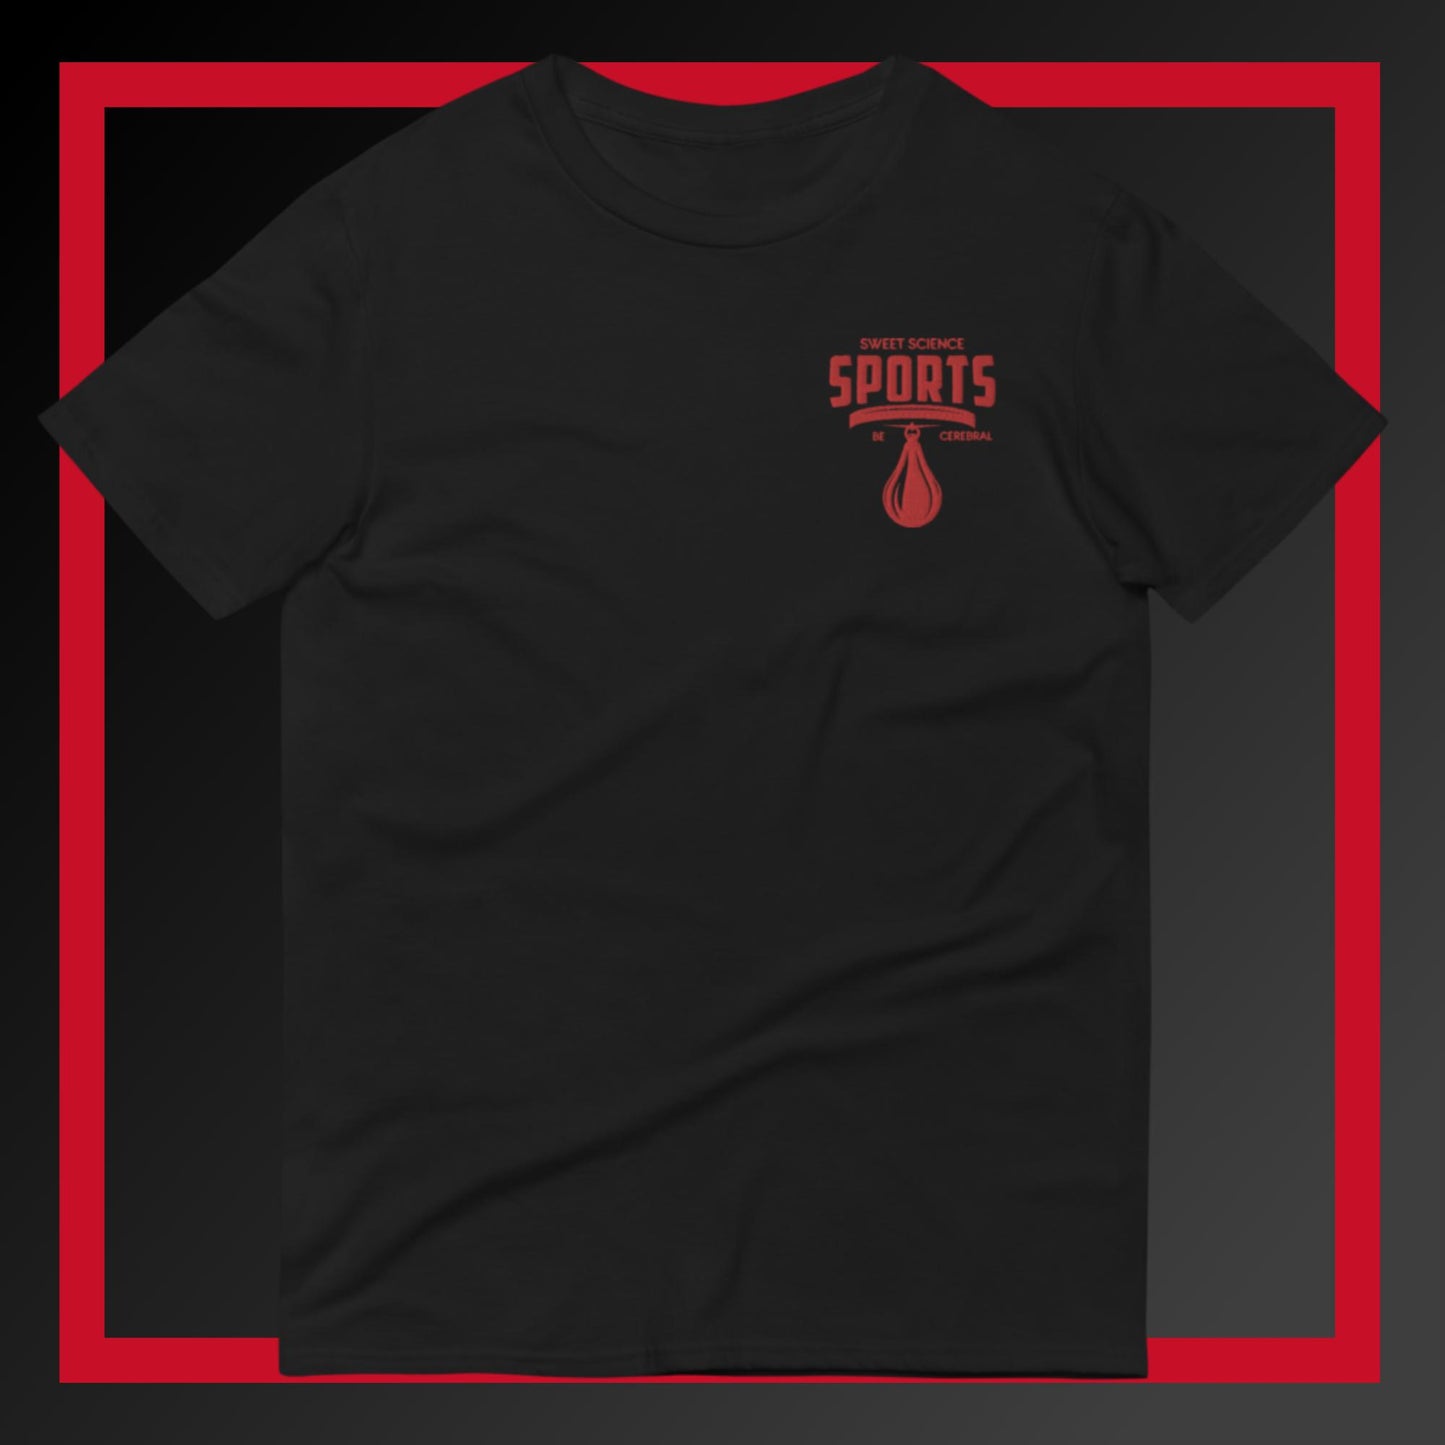 Sweet Science Sports Short-Sleeve T-Shirt